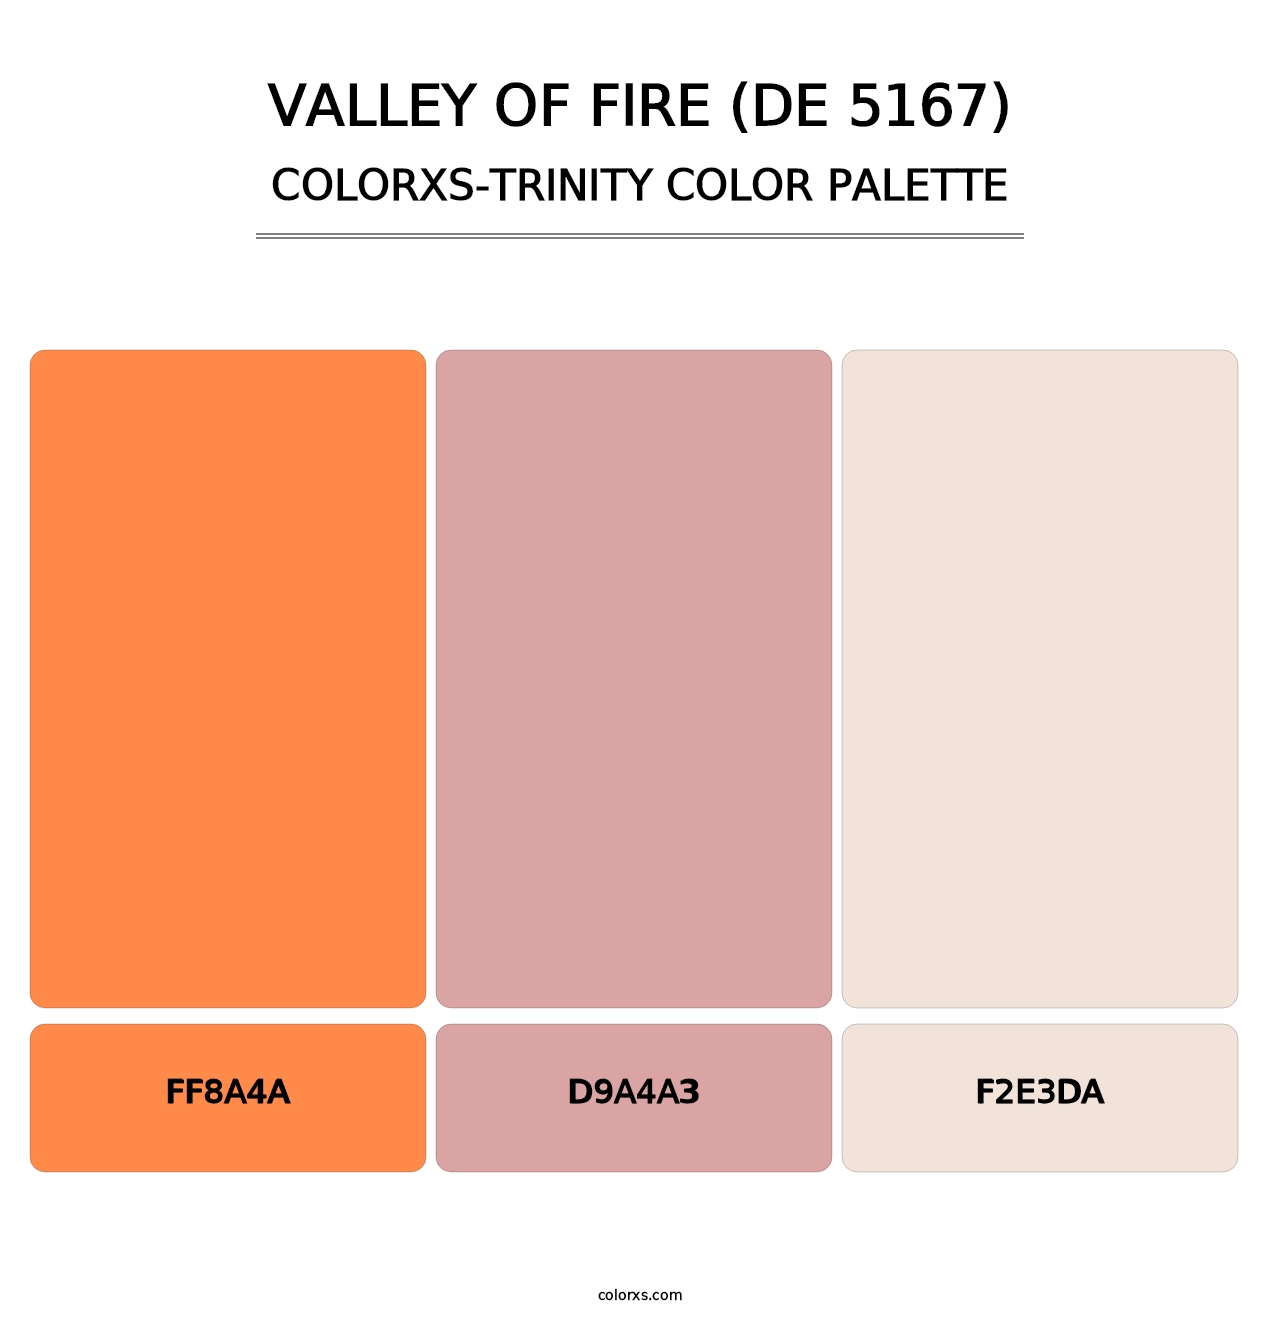 Valley of Fire (DE 5167) - Colorxs Trinity Palette